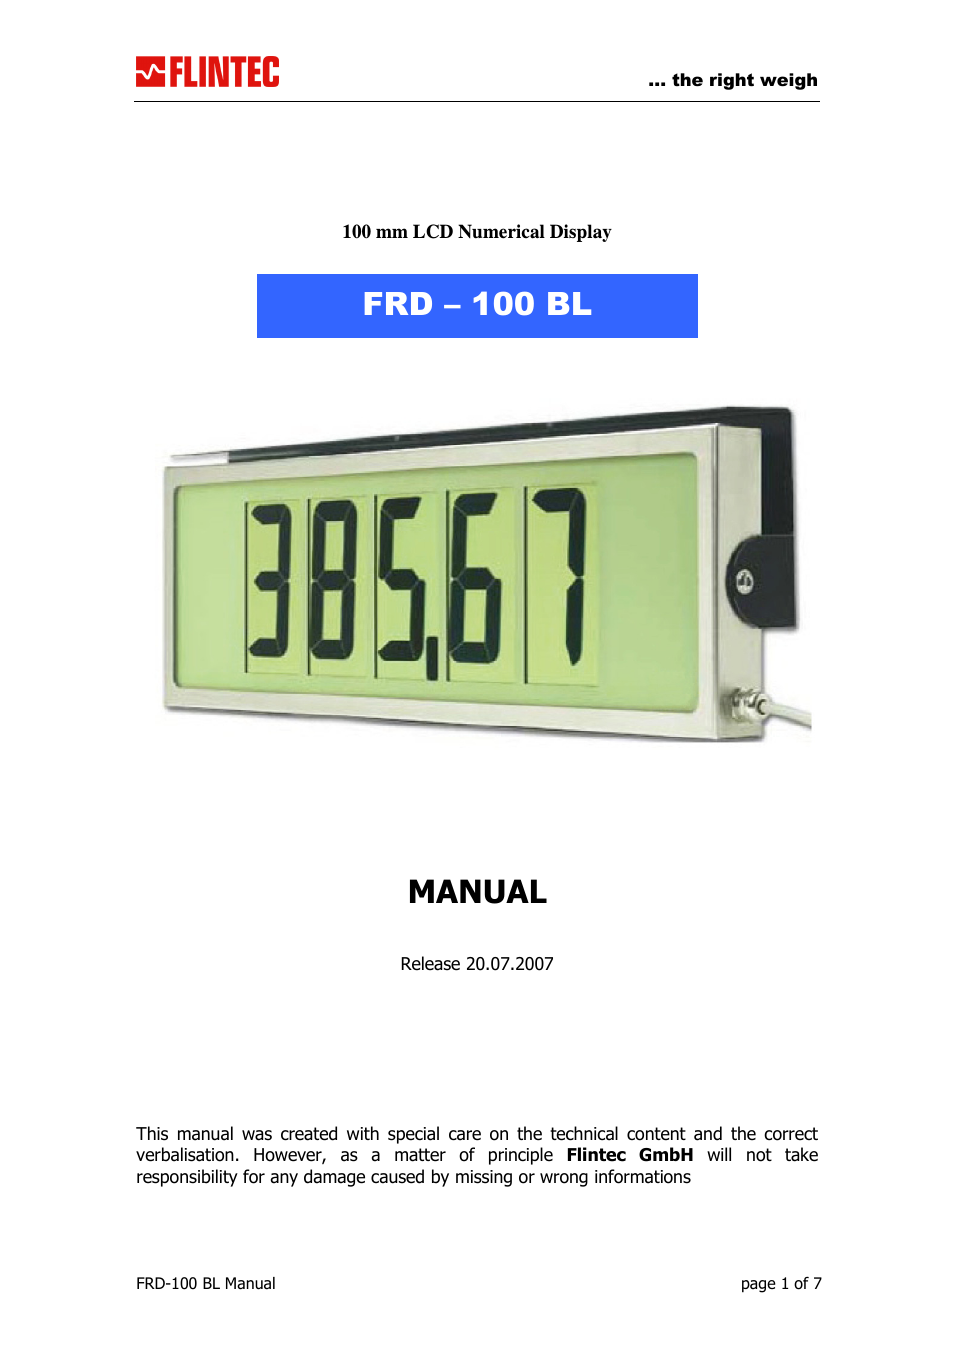 FRD-100 LCD